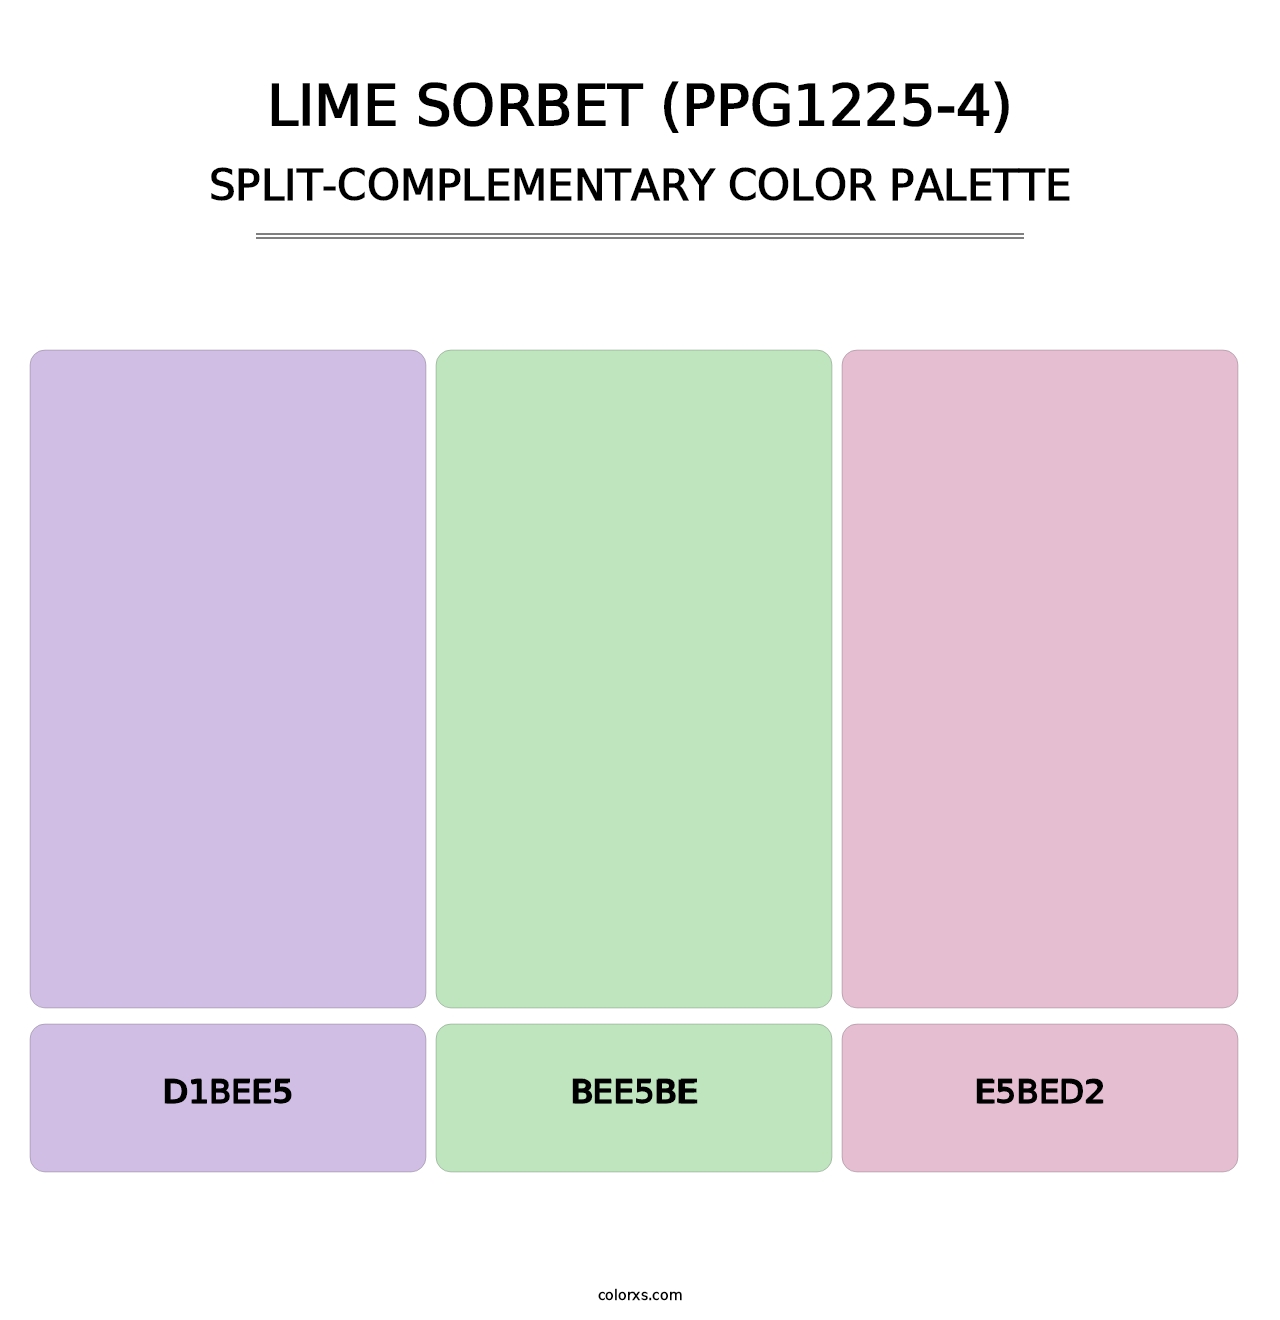 Lime Sorbet (PPG1225-4) - Split-Complementary Color Palette